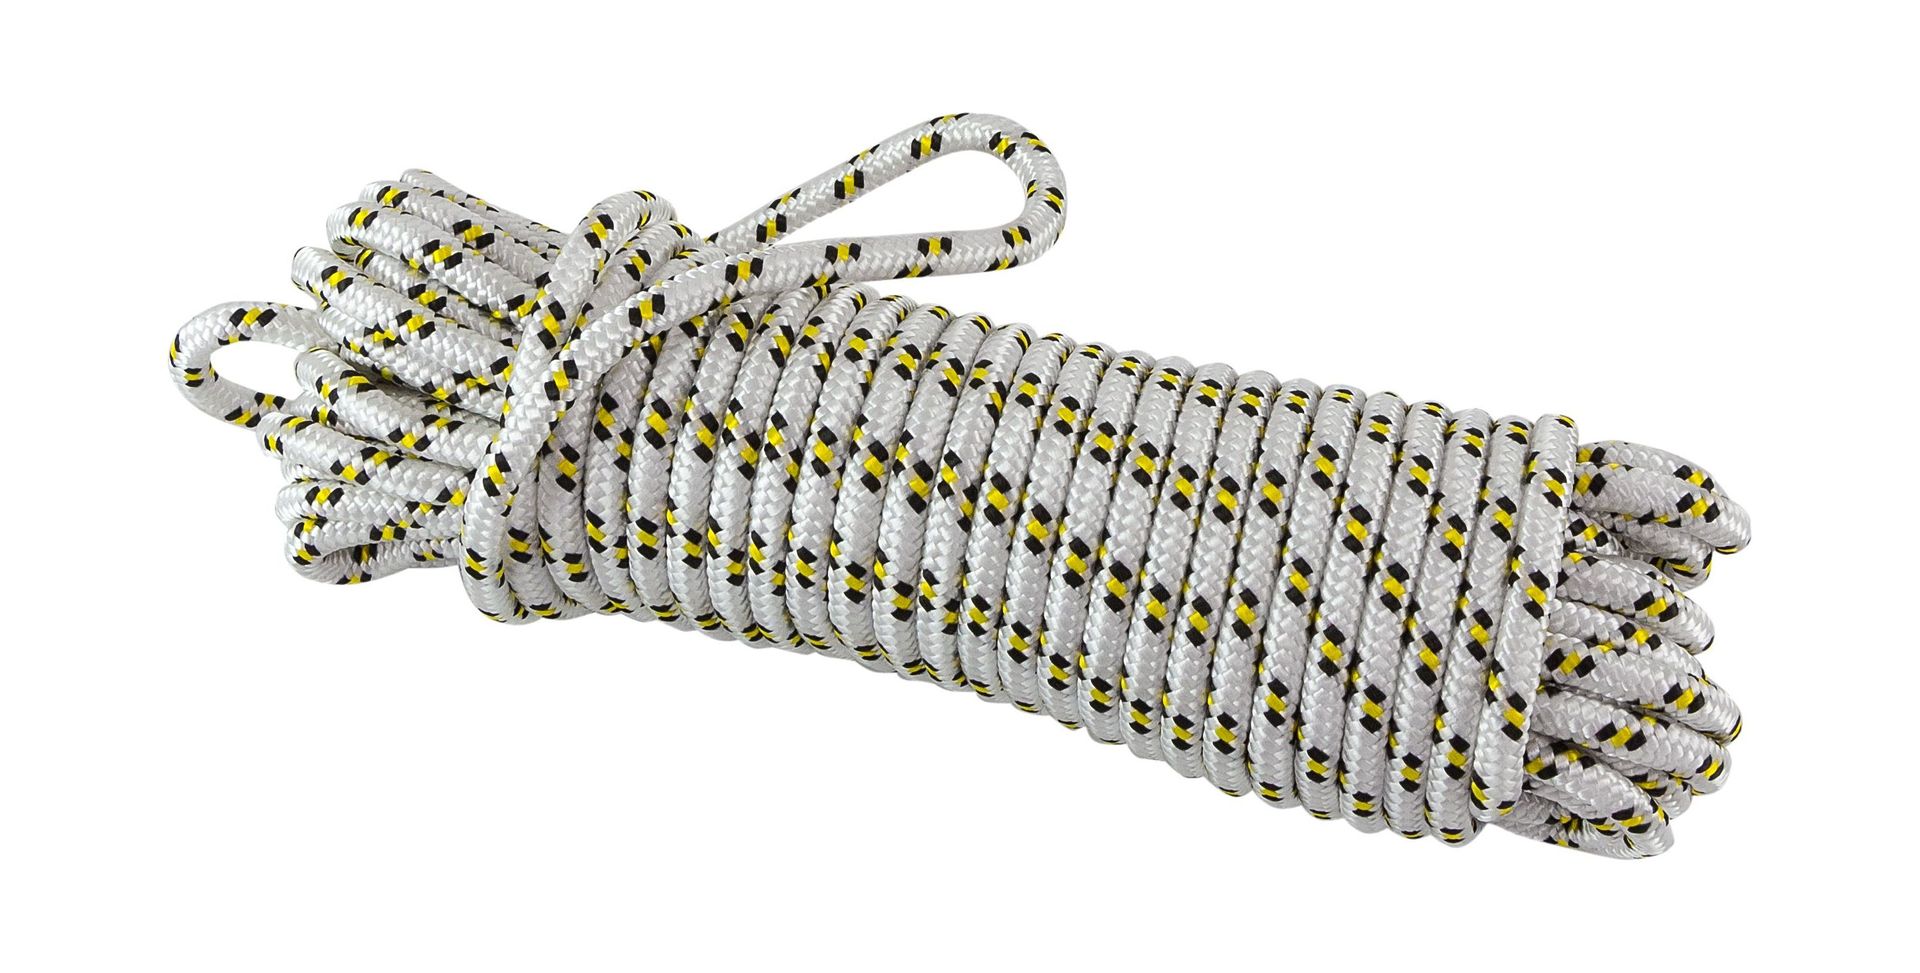 Шнур полипропиленовый плетеный d 8 мм, L 20 м SHND8L20 полипропиленовый крученый шнур сибшнур